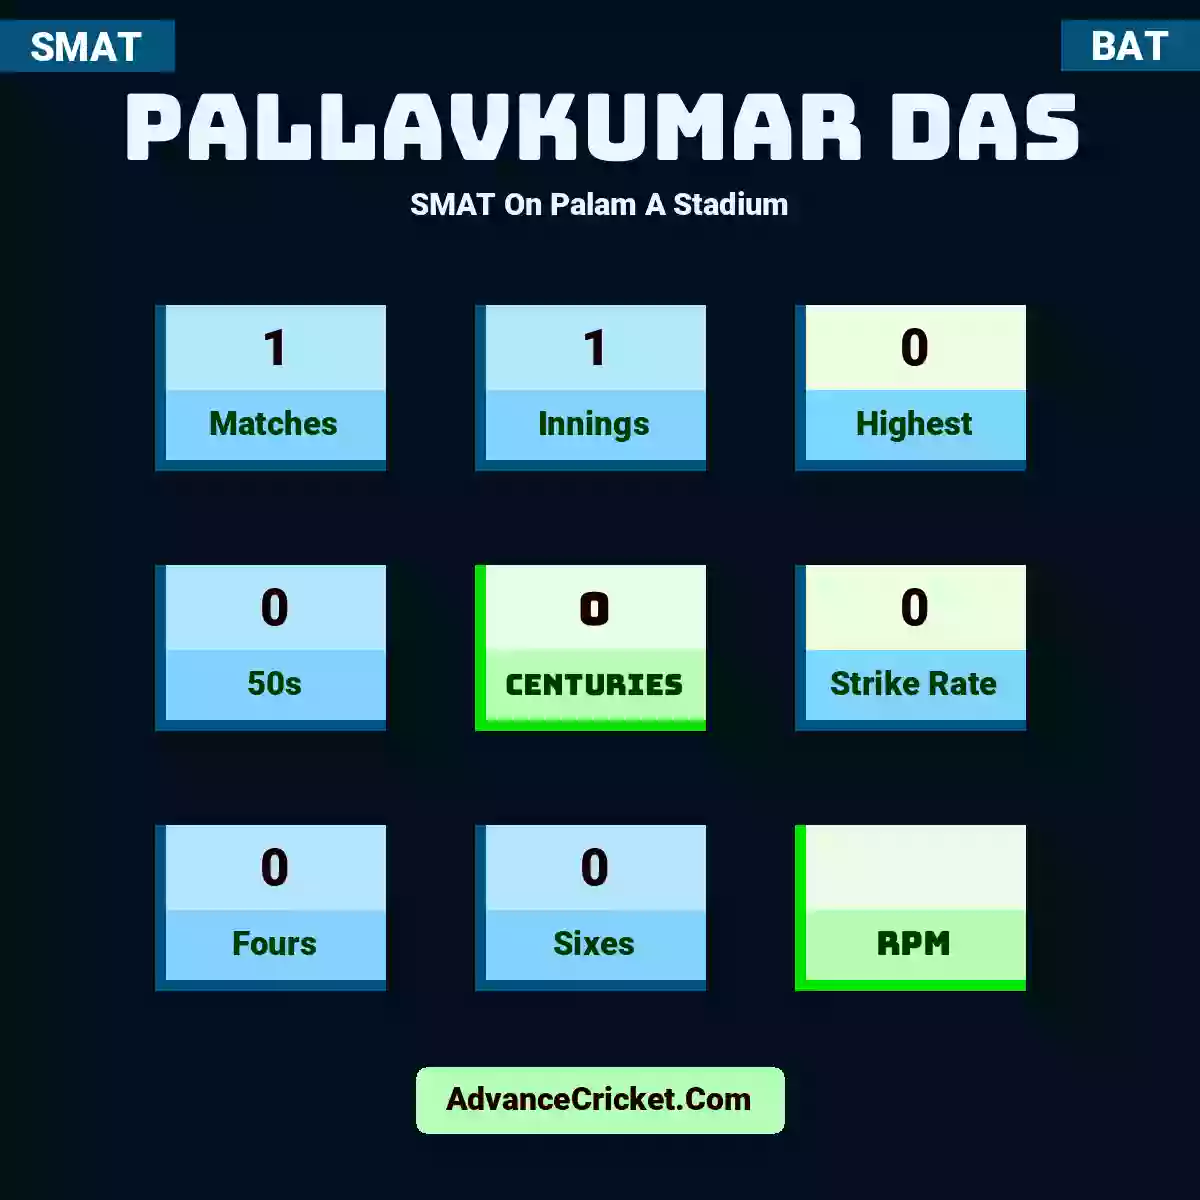 Pallavkumar Das SMAT  On Palam A Stadium, Pallavkumar Das played 1 matches, scored 0 runs as highest, 0 half-centuries, and 0 centuries, with a strike rate of 0. P.Das hit 0 fours and 0 sixes.